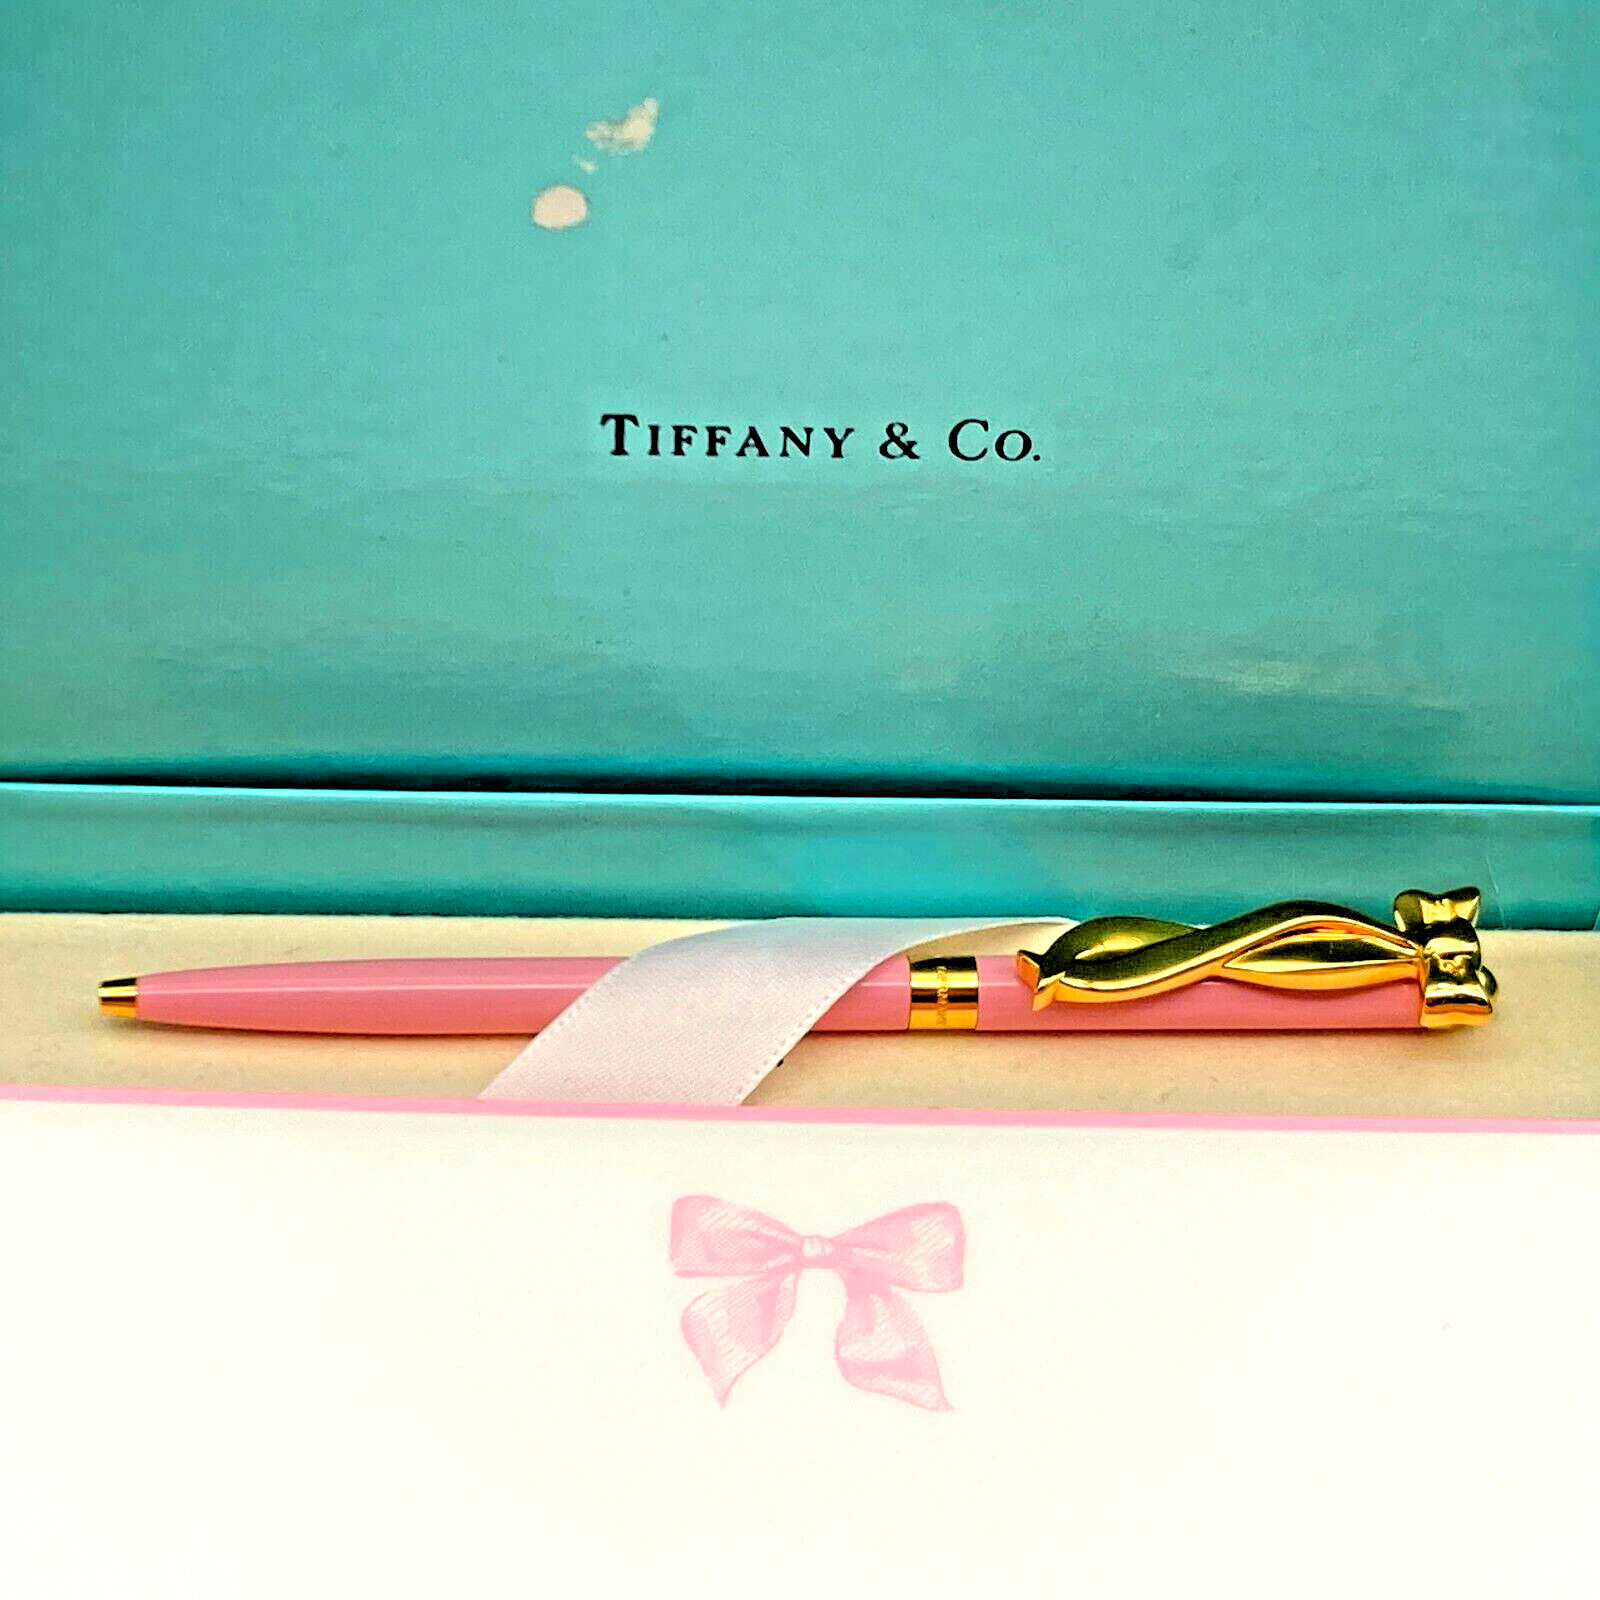 Tiffany & Co. Ballpoint Pen Pink ribbon Perth pen Black ink 20.5g